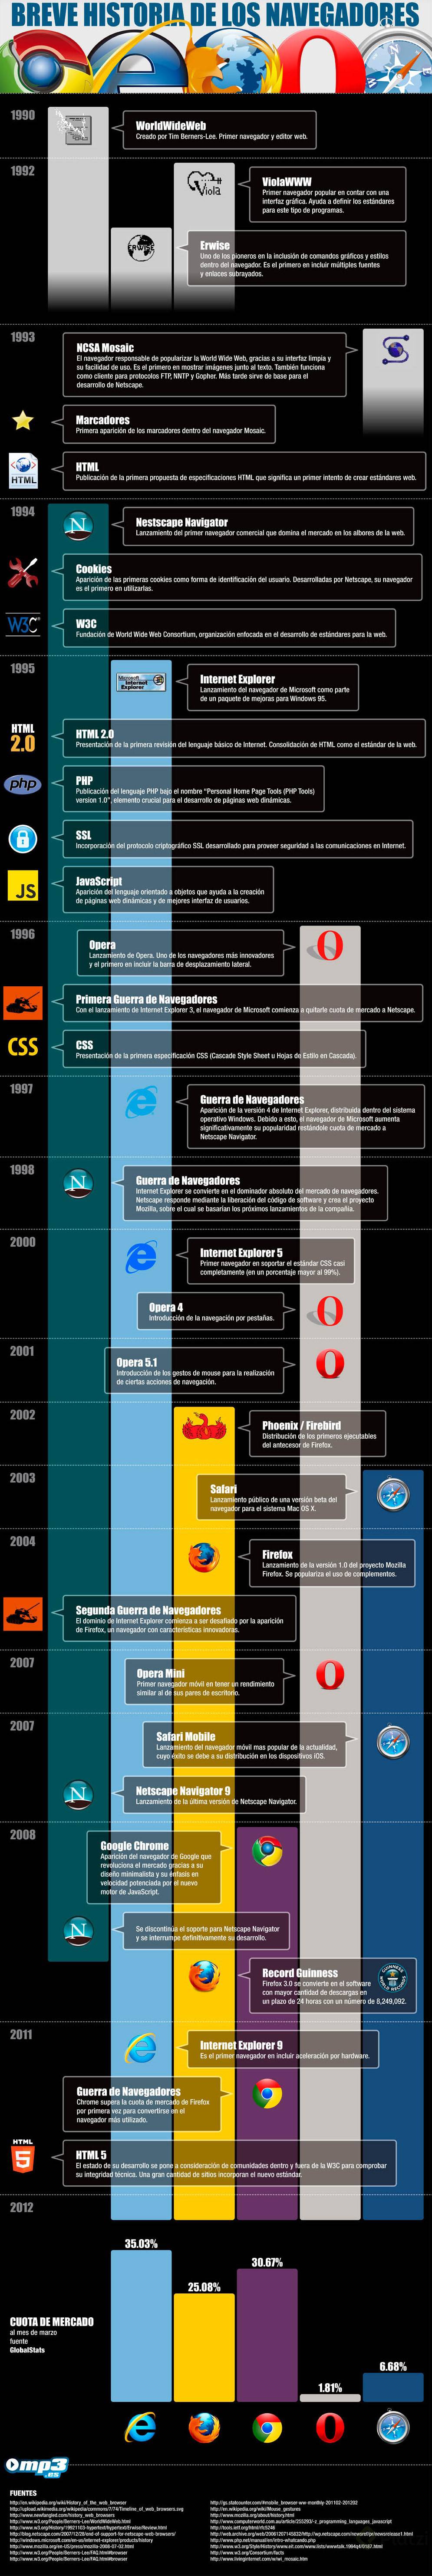 infografia-historia-navegadores (1).jpg